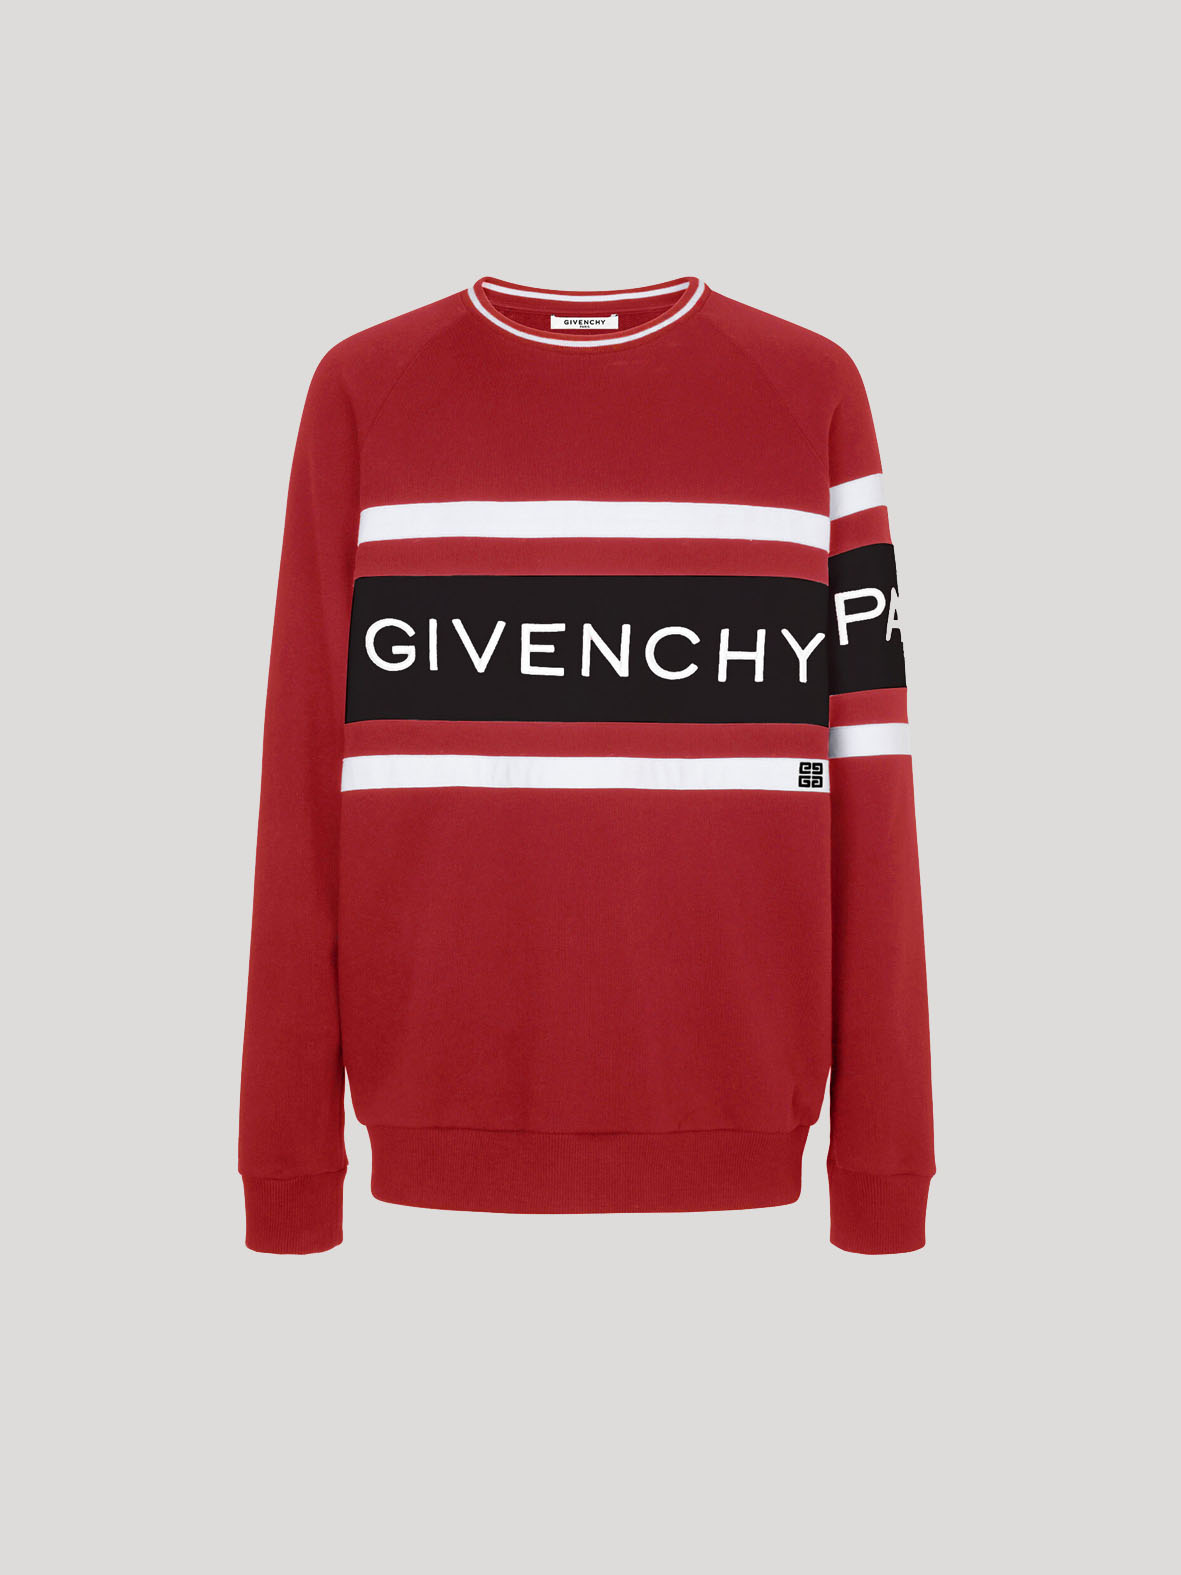 Givenchy Embroidered Slim Sweatshirt - Kicks Galeria